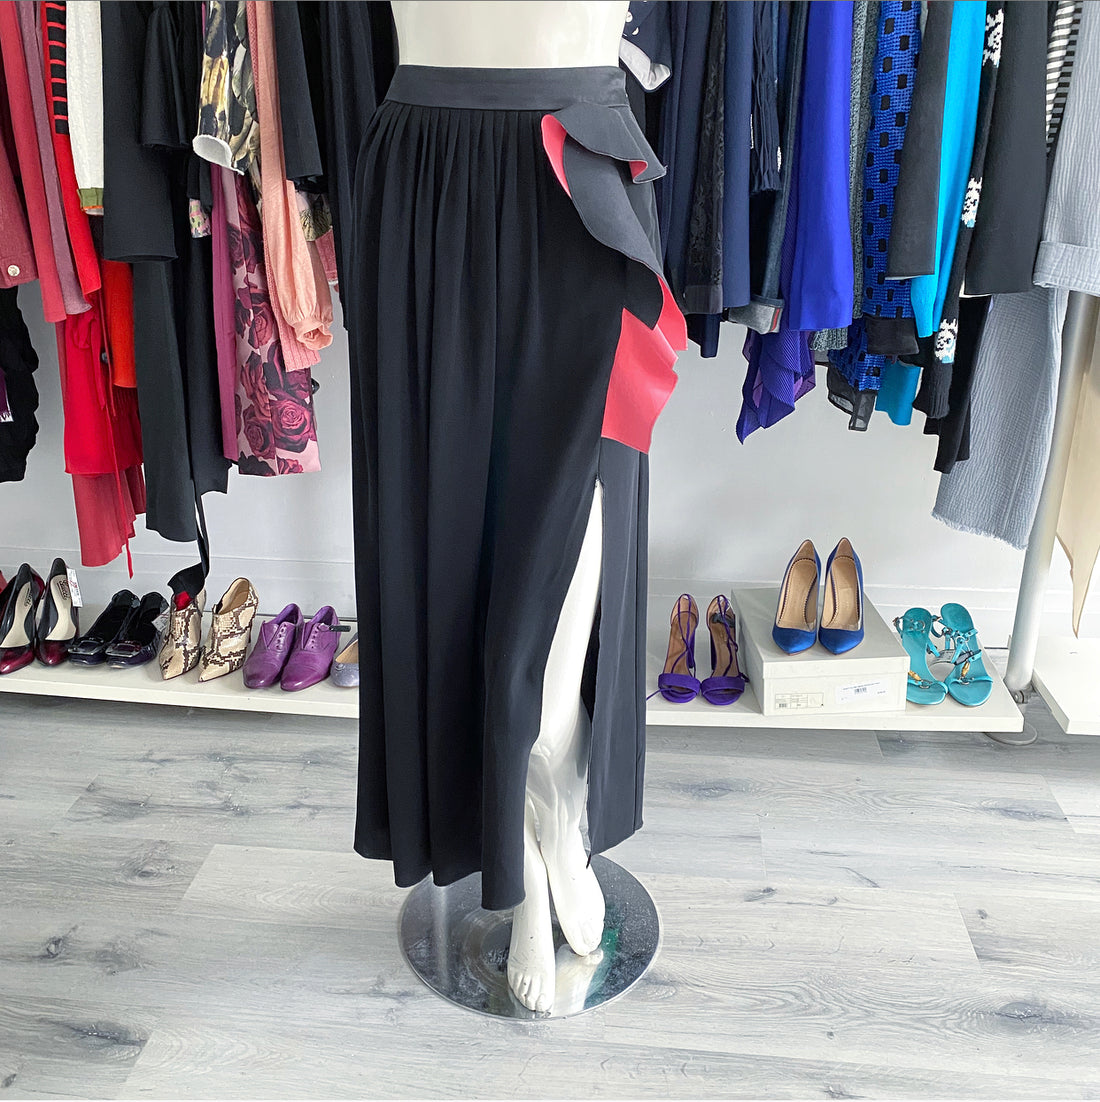 Roksanda Spring 2015 Lorette Black Long Skirt with Pink Ruffle - 8 / 10